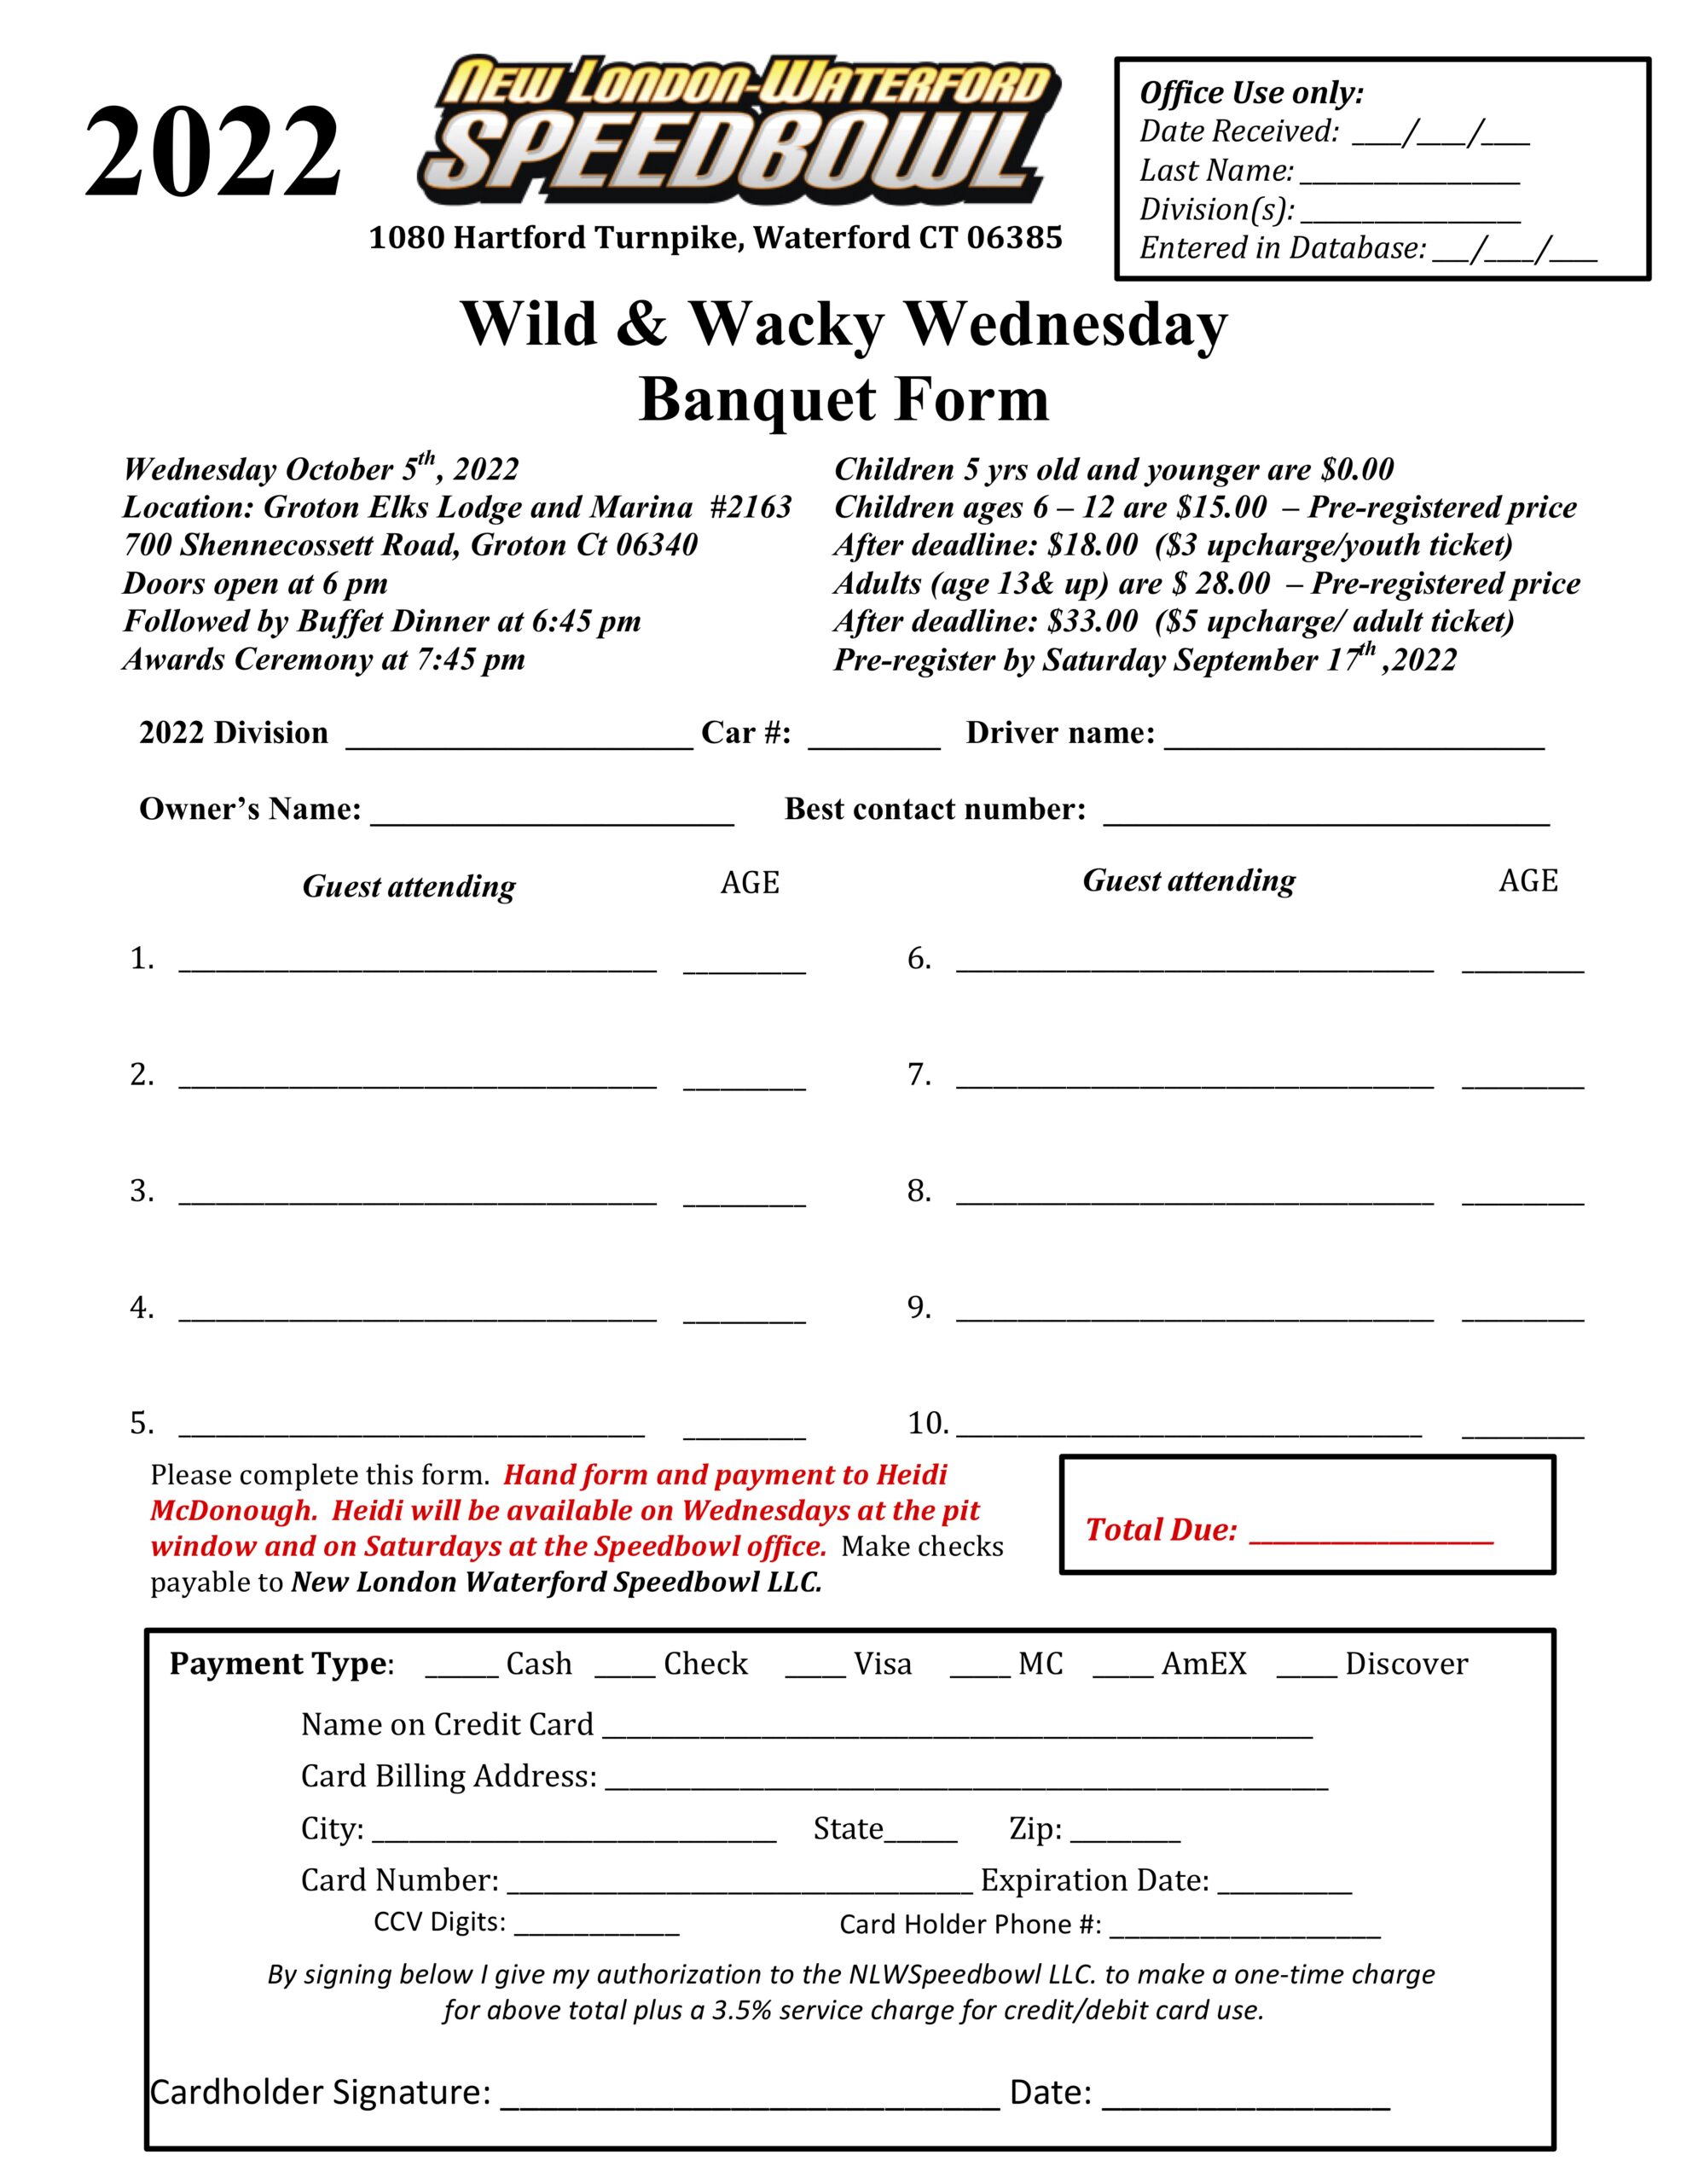 2022 Wild & Wacky Wednesday Awards Banquet Form